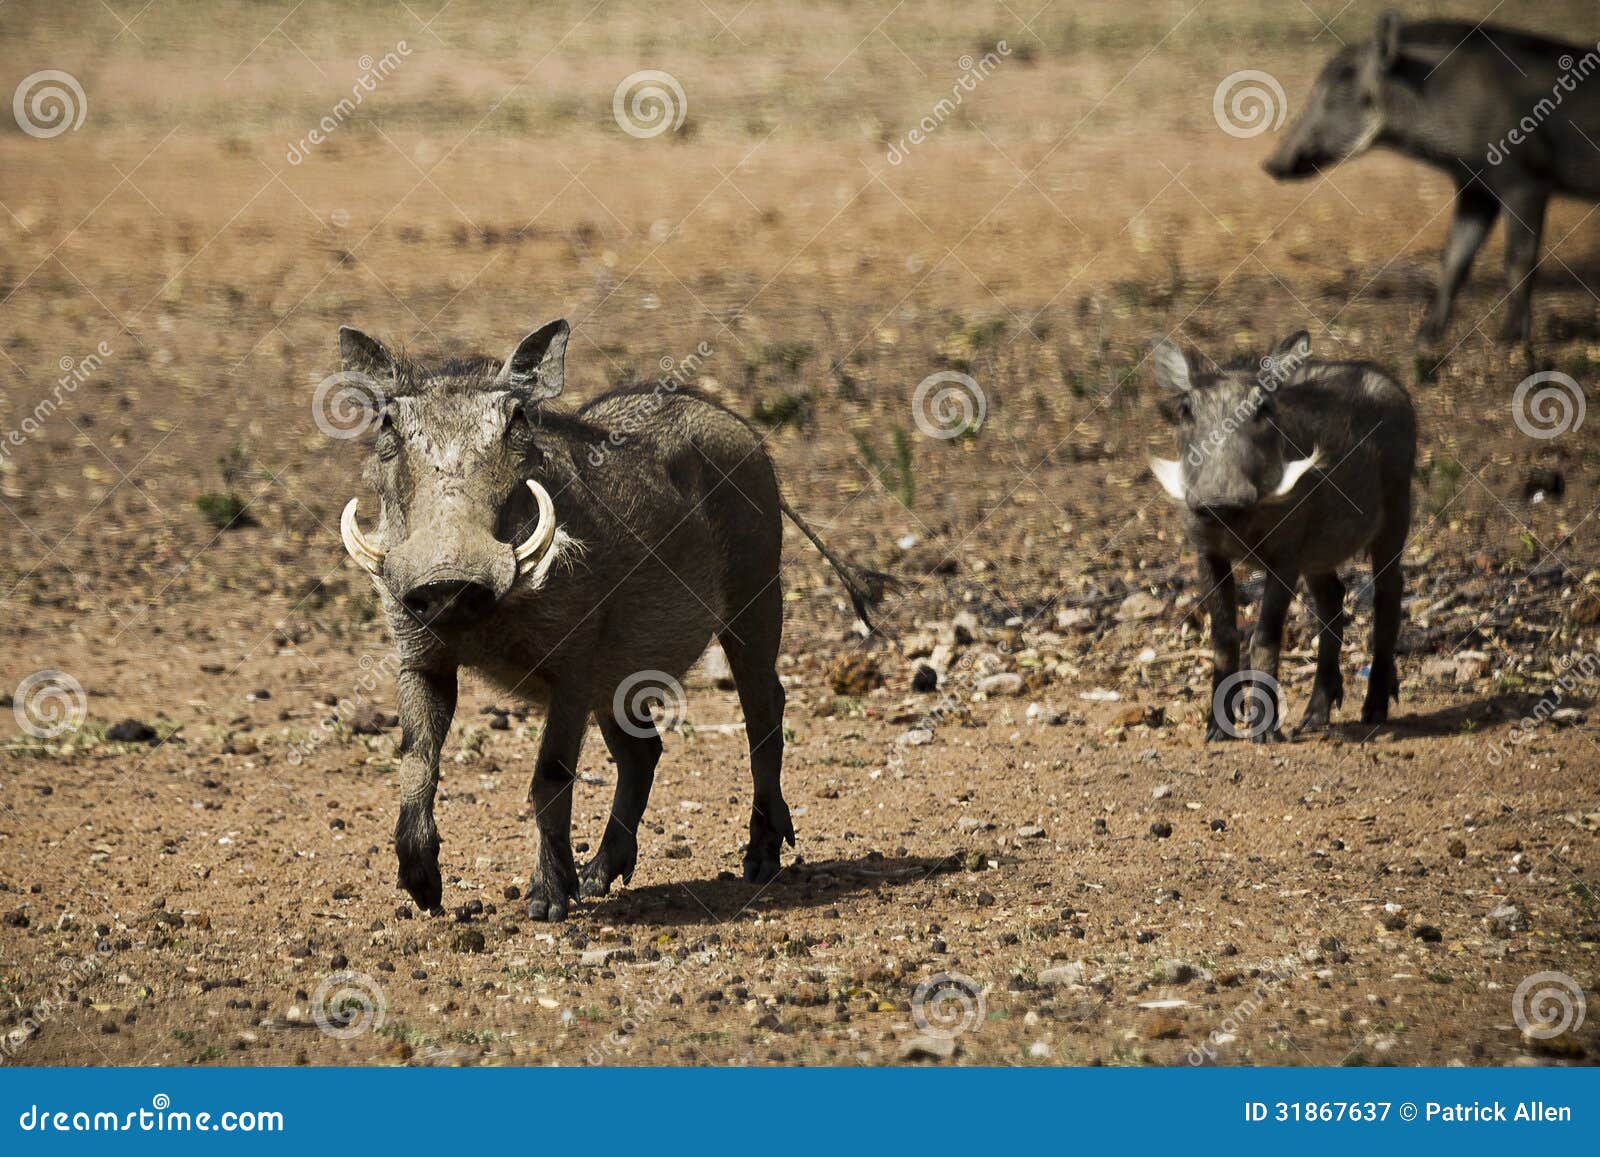 female warthog with piglets